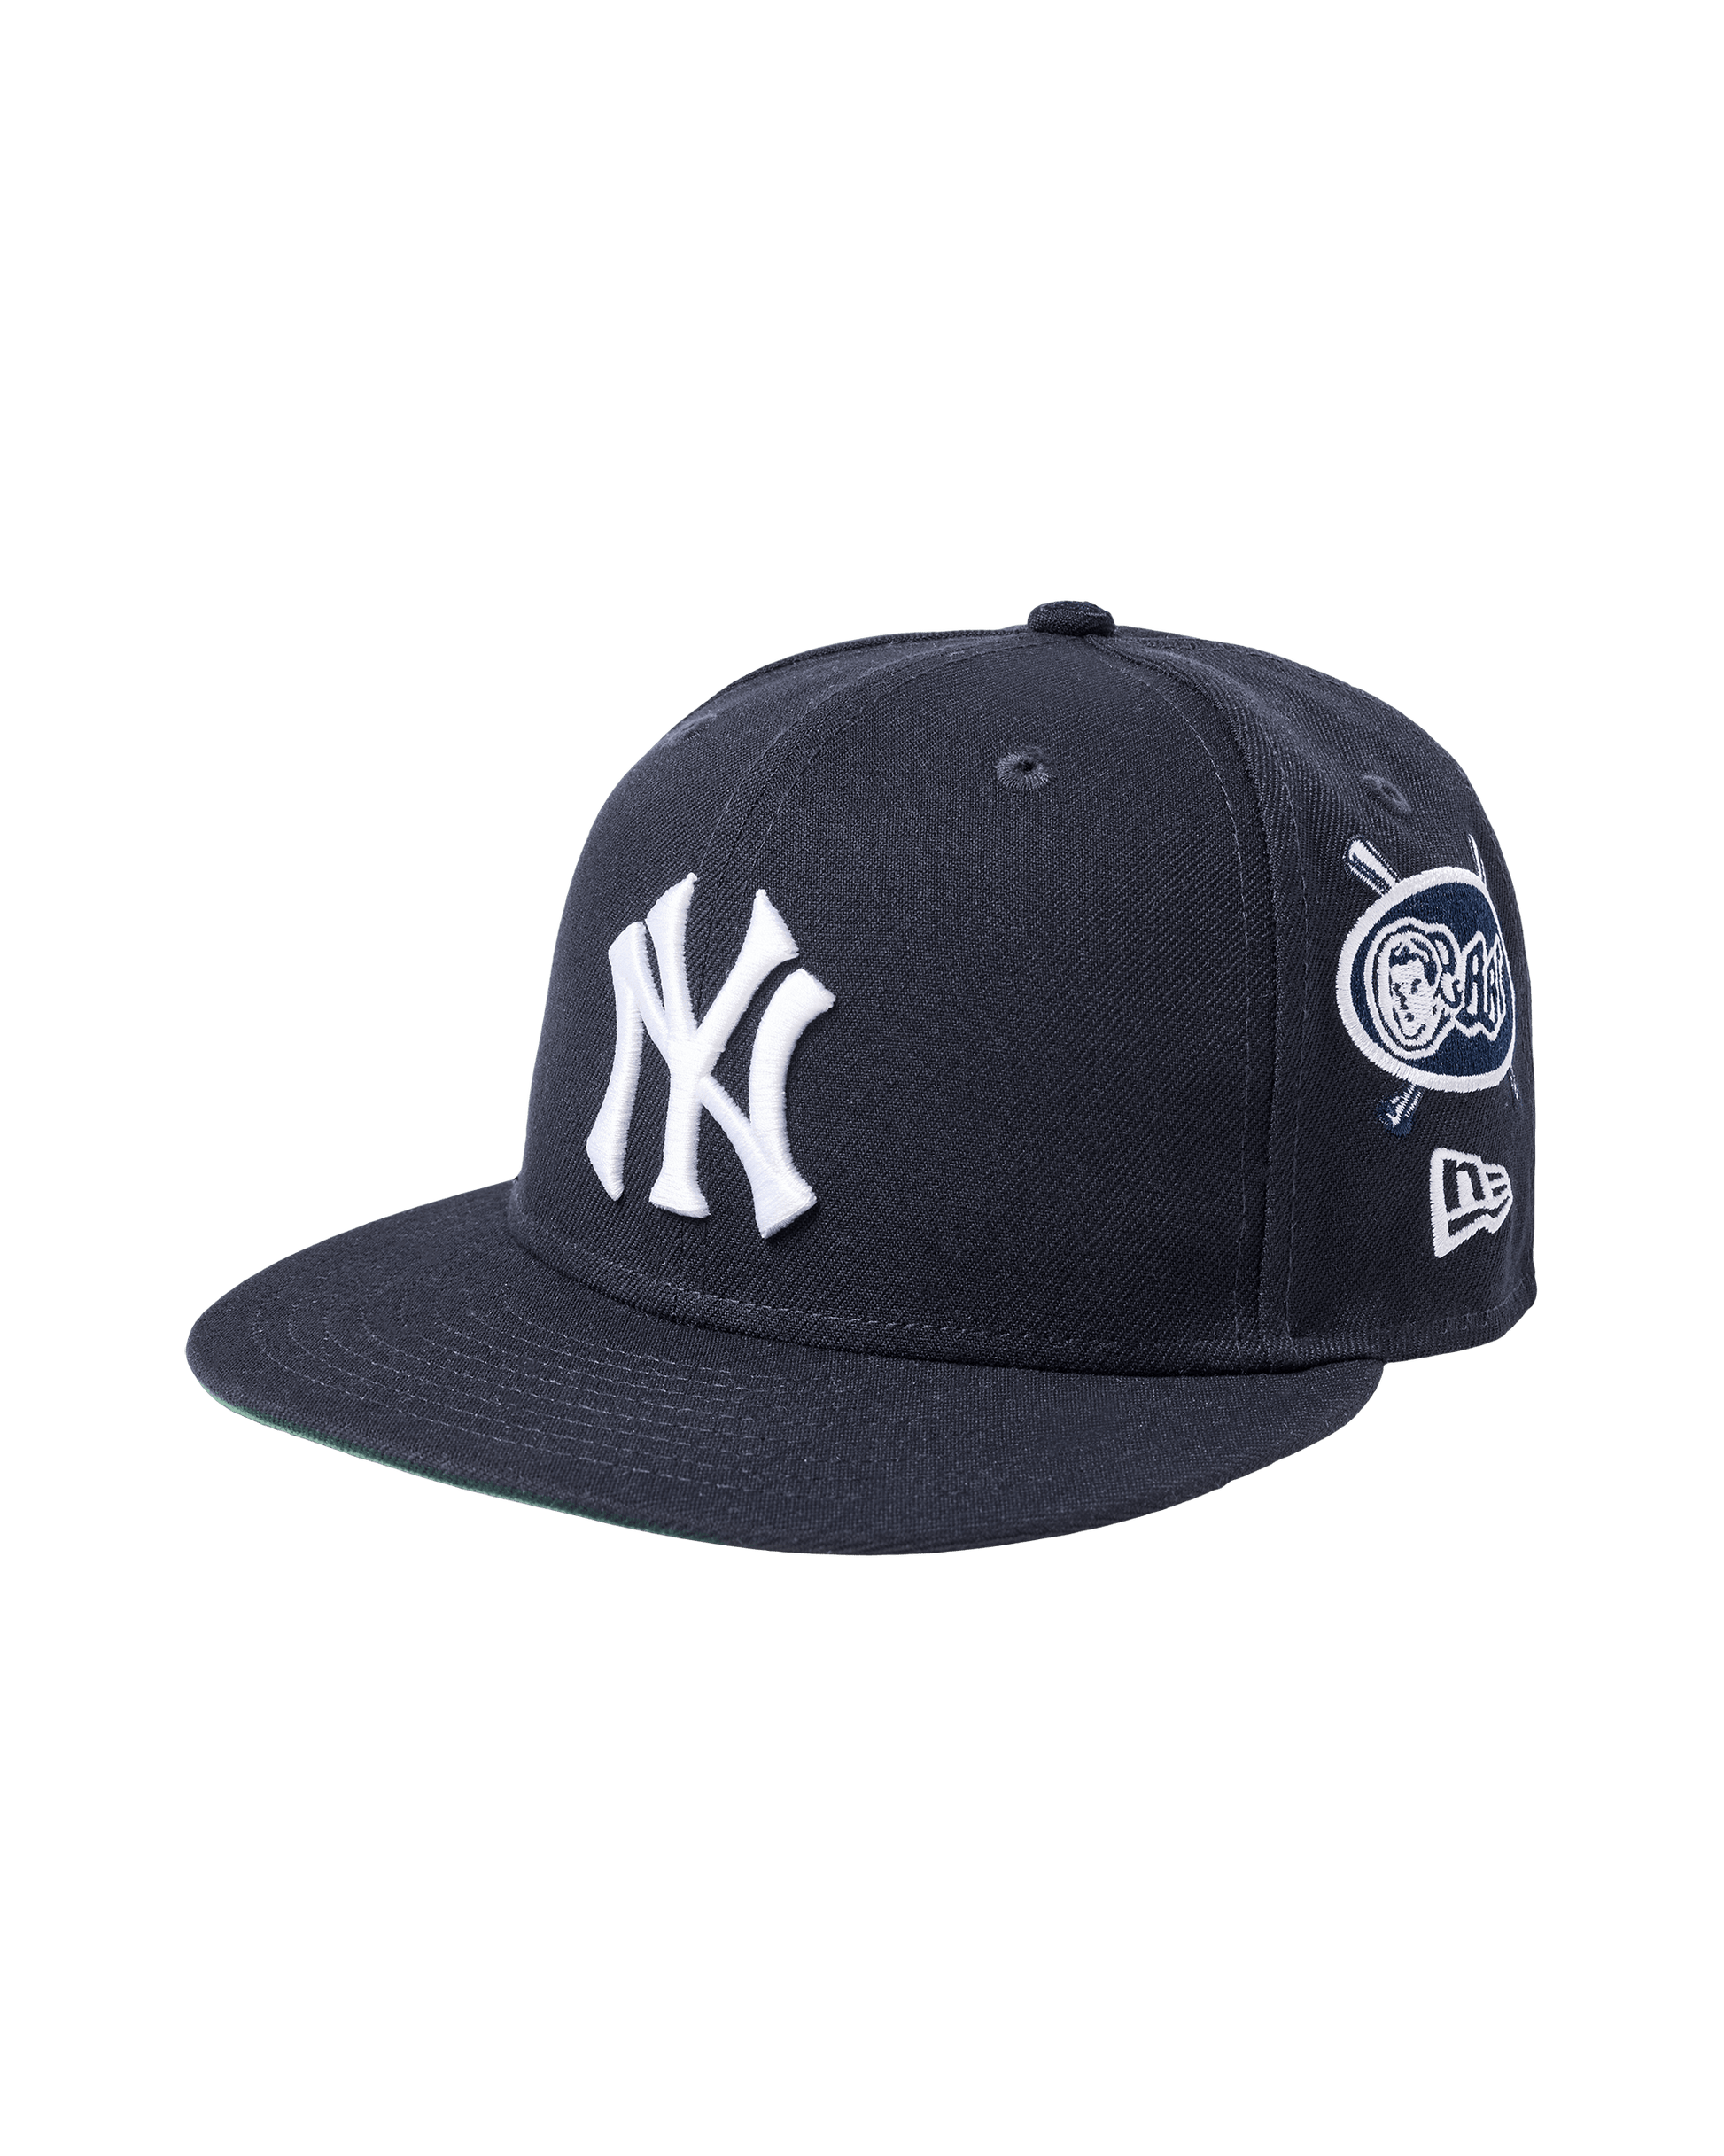 New Era NY Yankees Fitted Hat - Billionaire Boys Club x New York Yankees